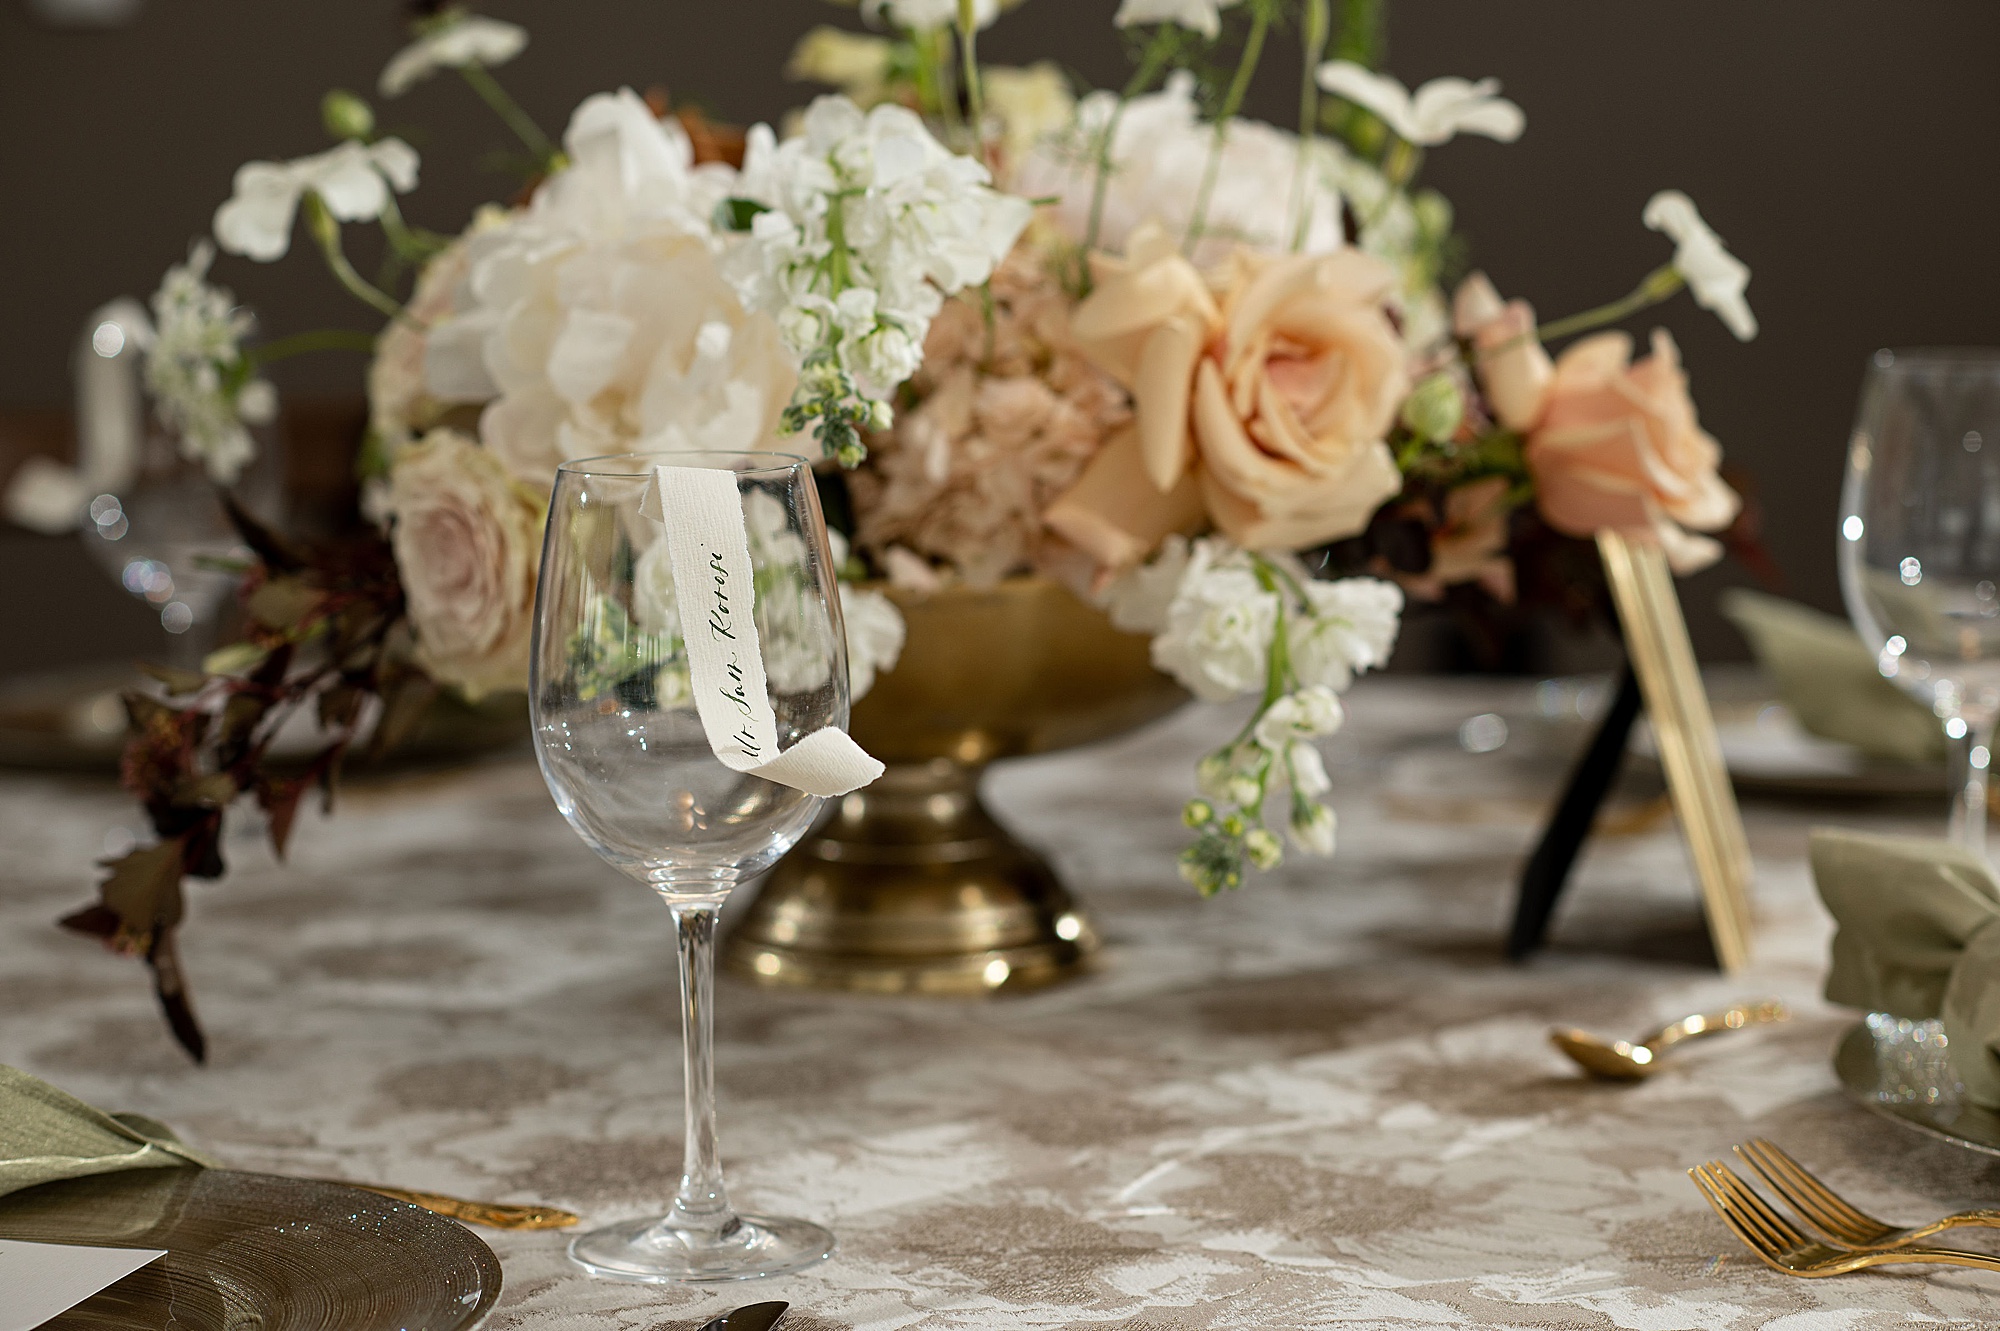 elegant floral display with wine glasses 